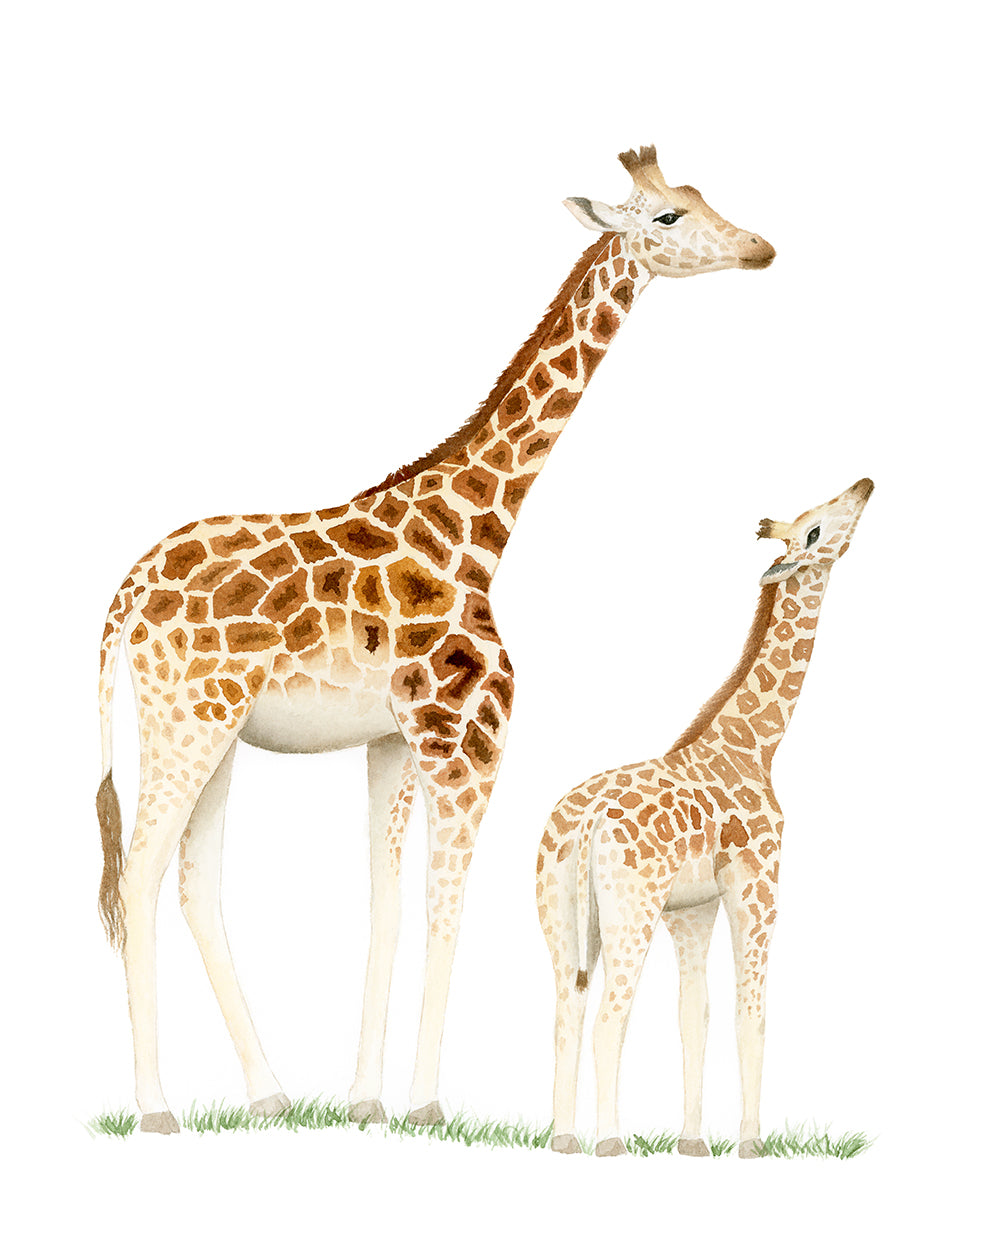 Giraffe Watercolor Painting - Art Print